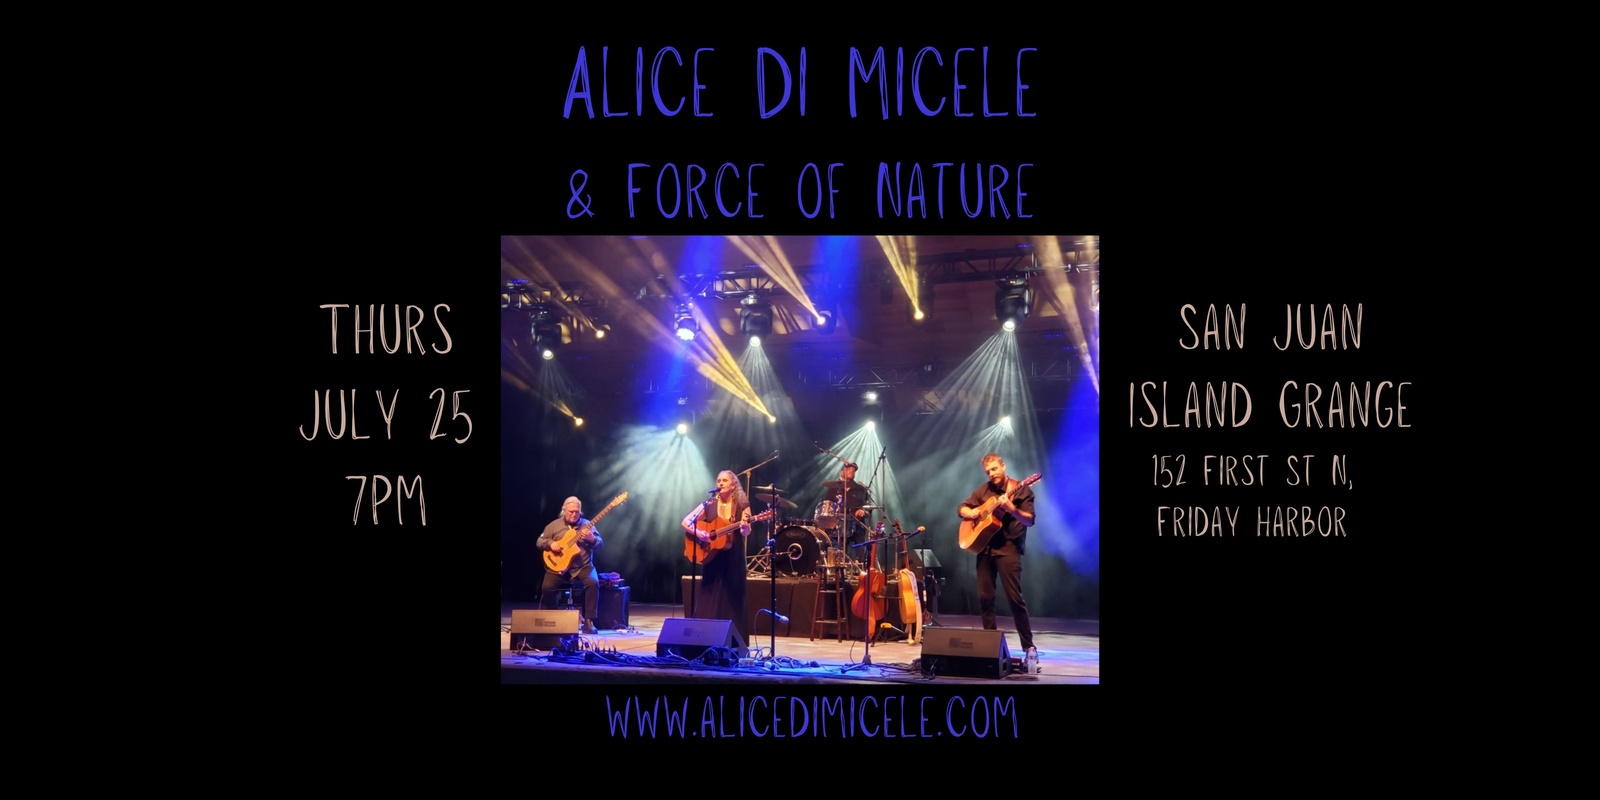 Banner image for Alice Di Micele & Force of Nature at the San Juan Island Grange